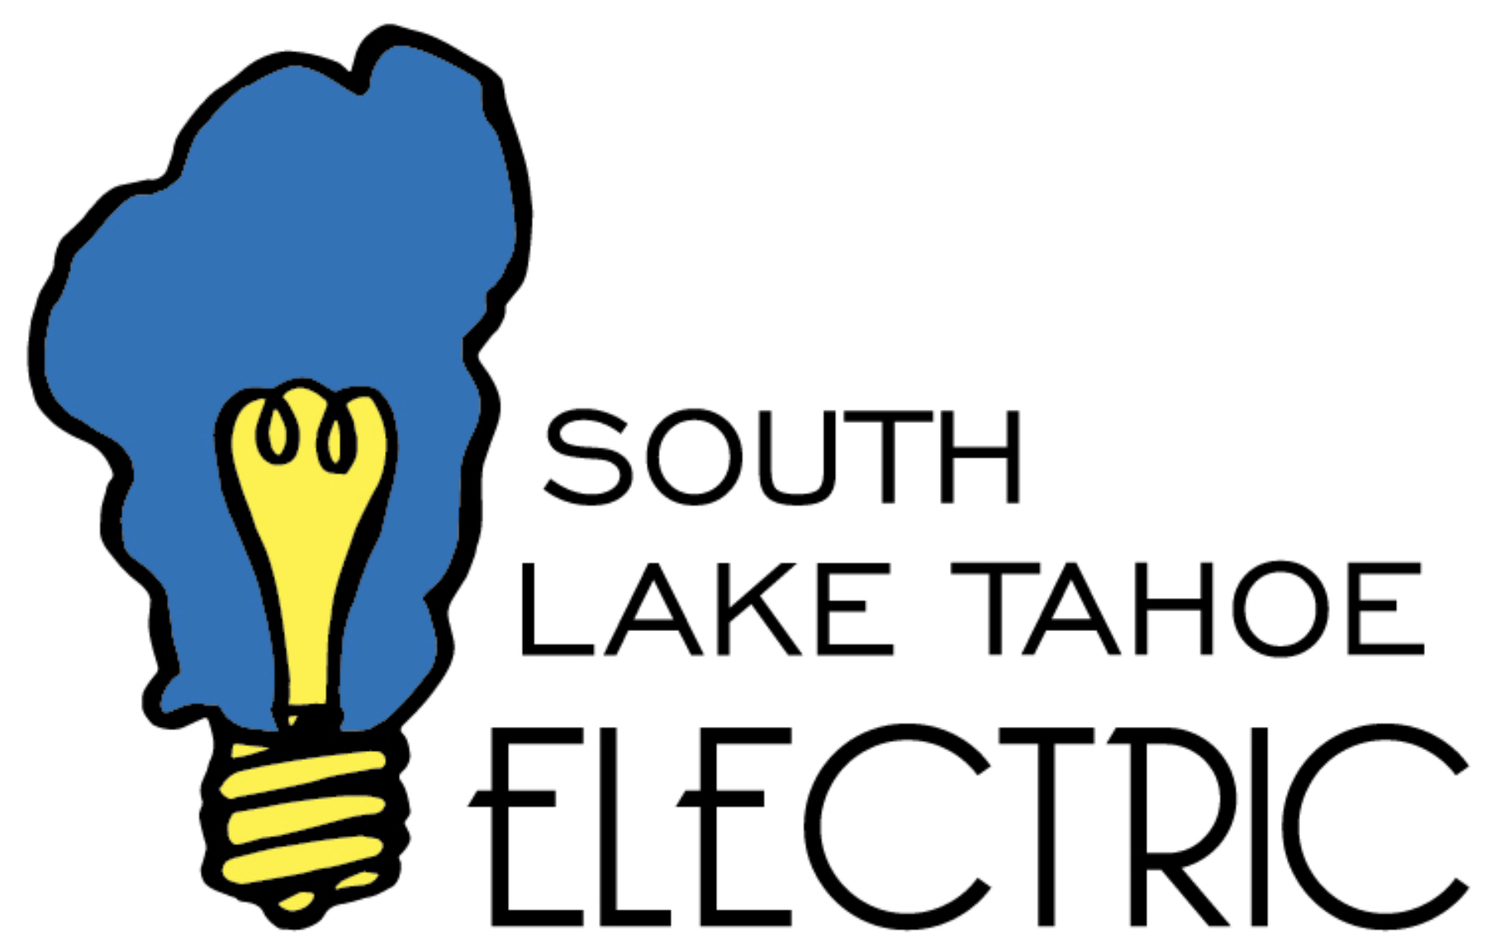 South Lake Tahoe Electric